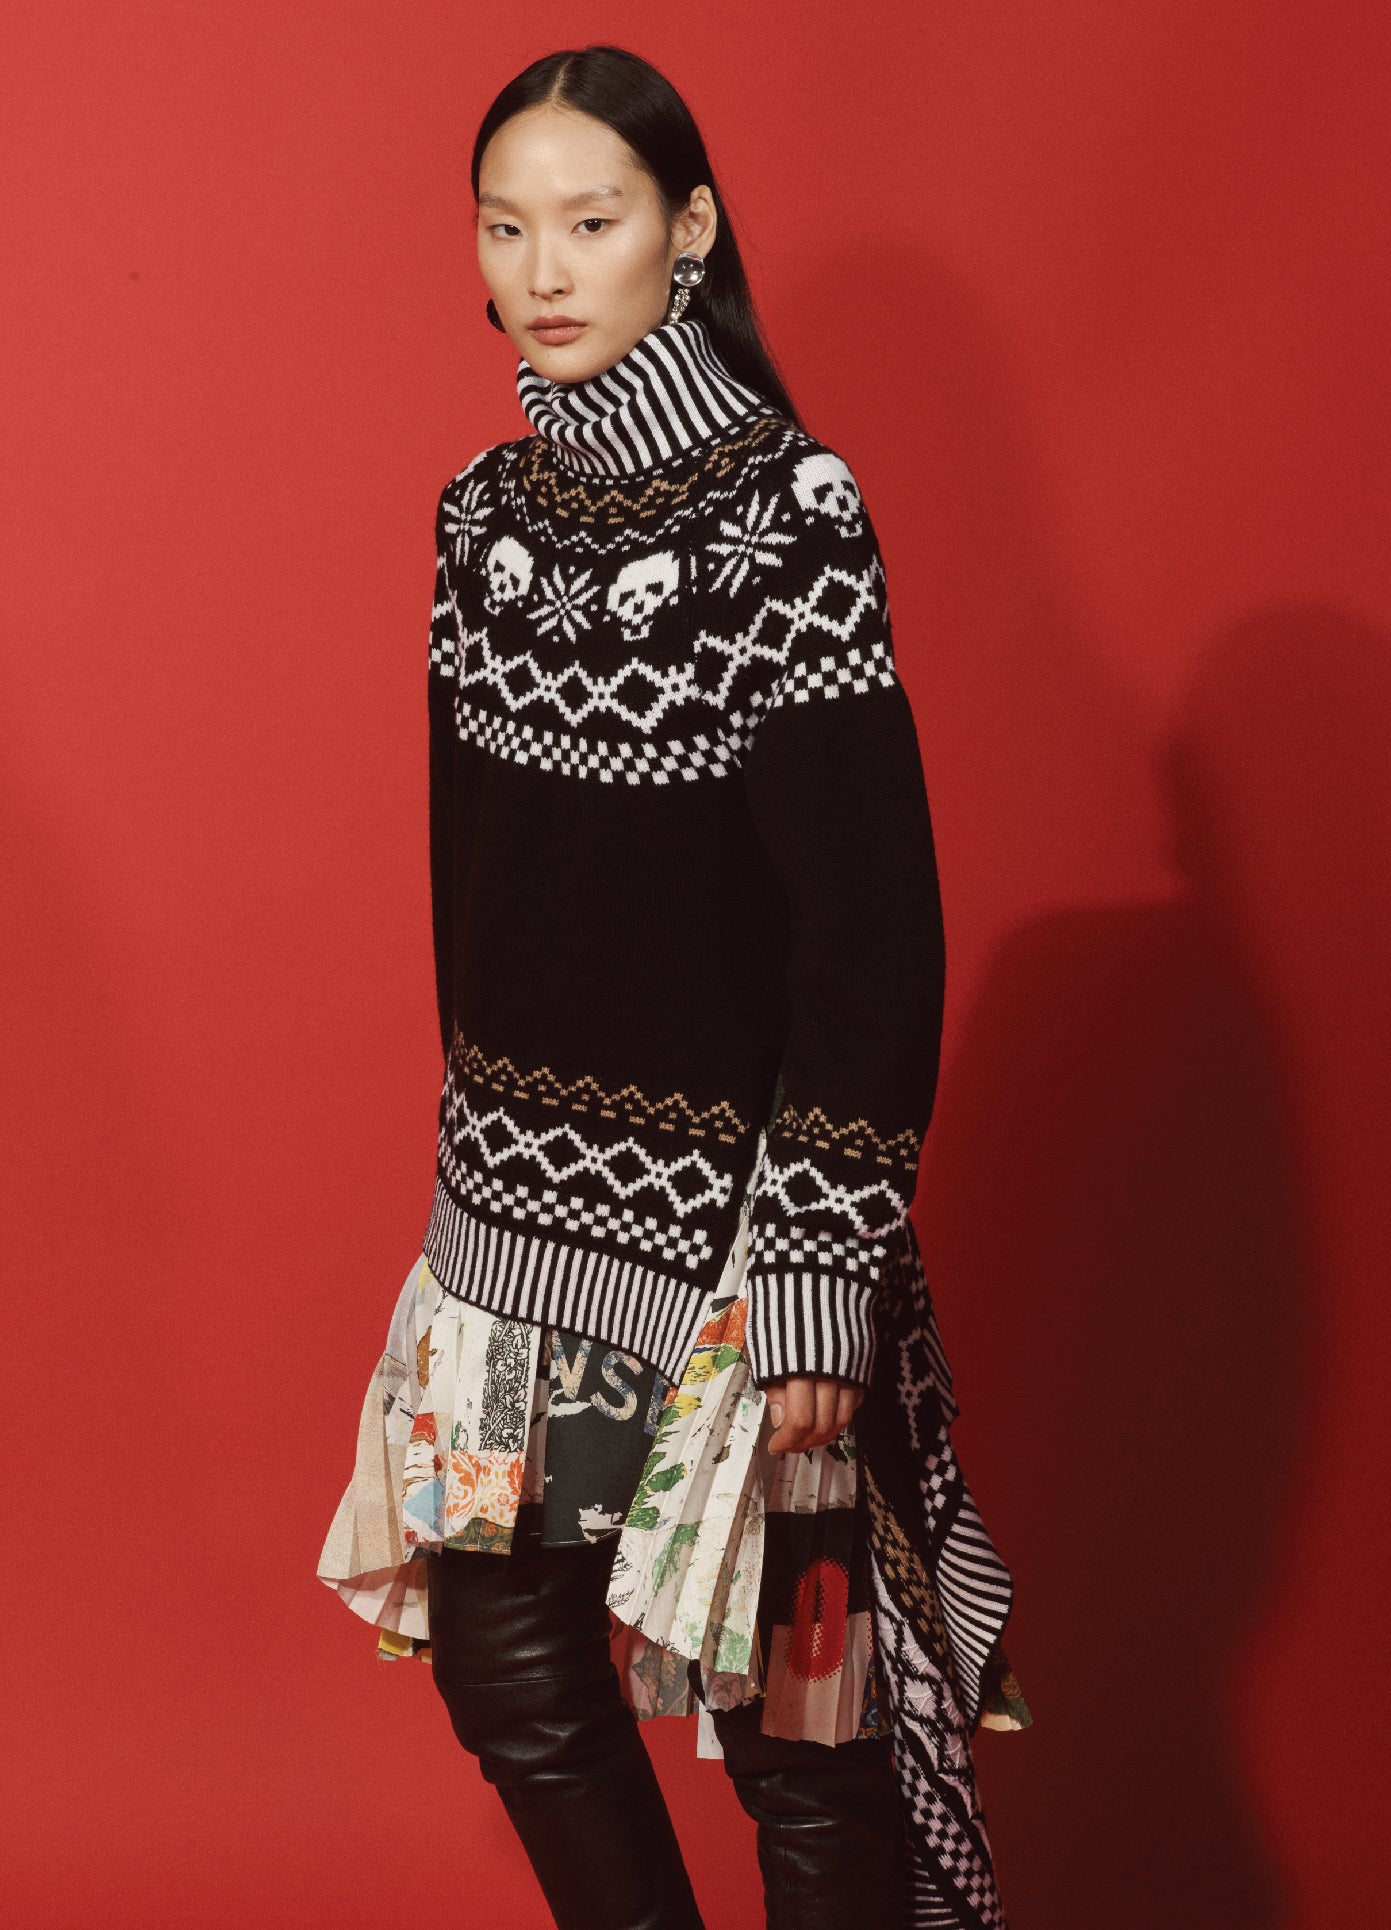 MONSE Skull Fairisle Knit Top in Black Multi on Asian Model Lookbook Front View